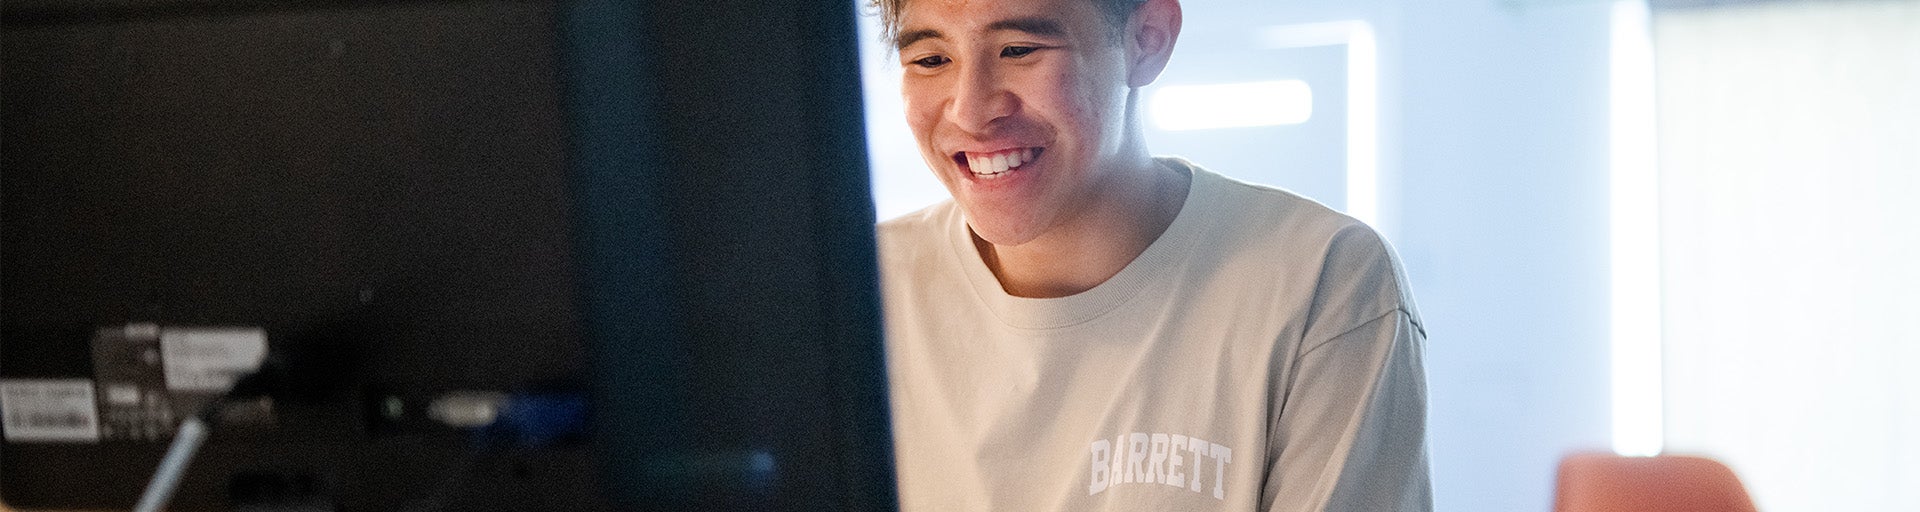 Barrett student using a desktop computer